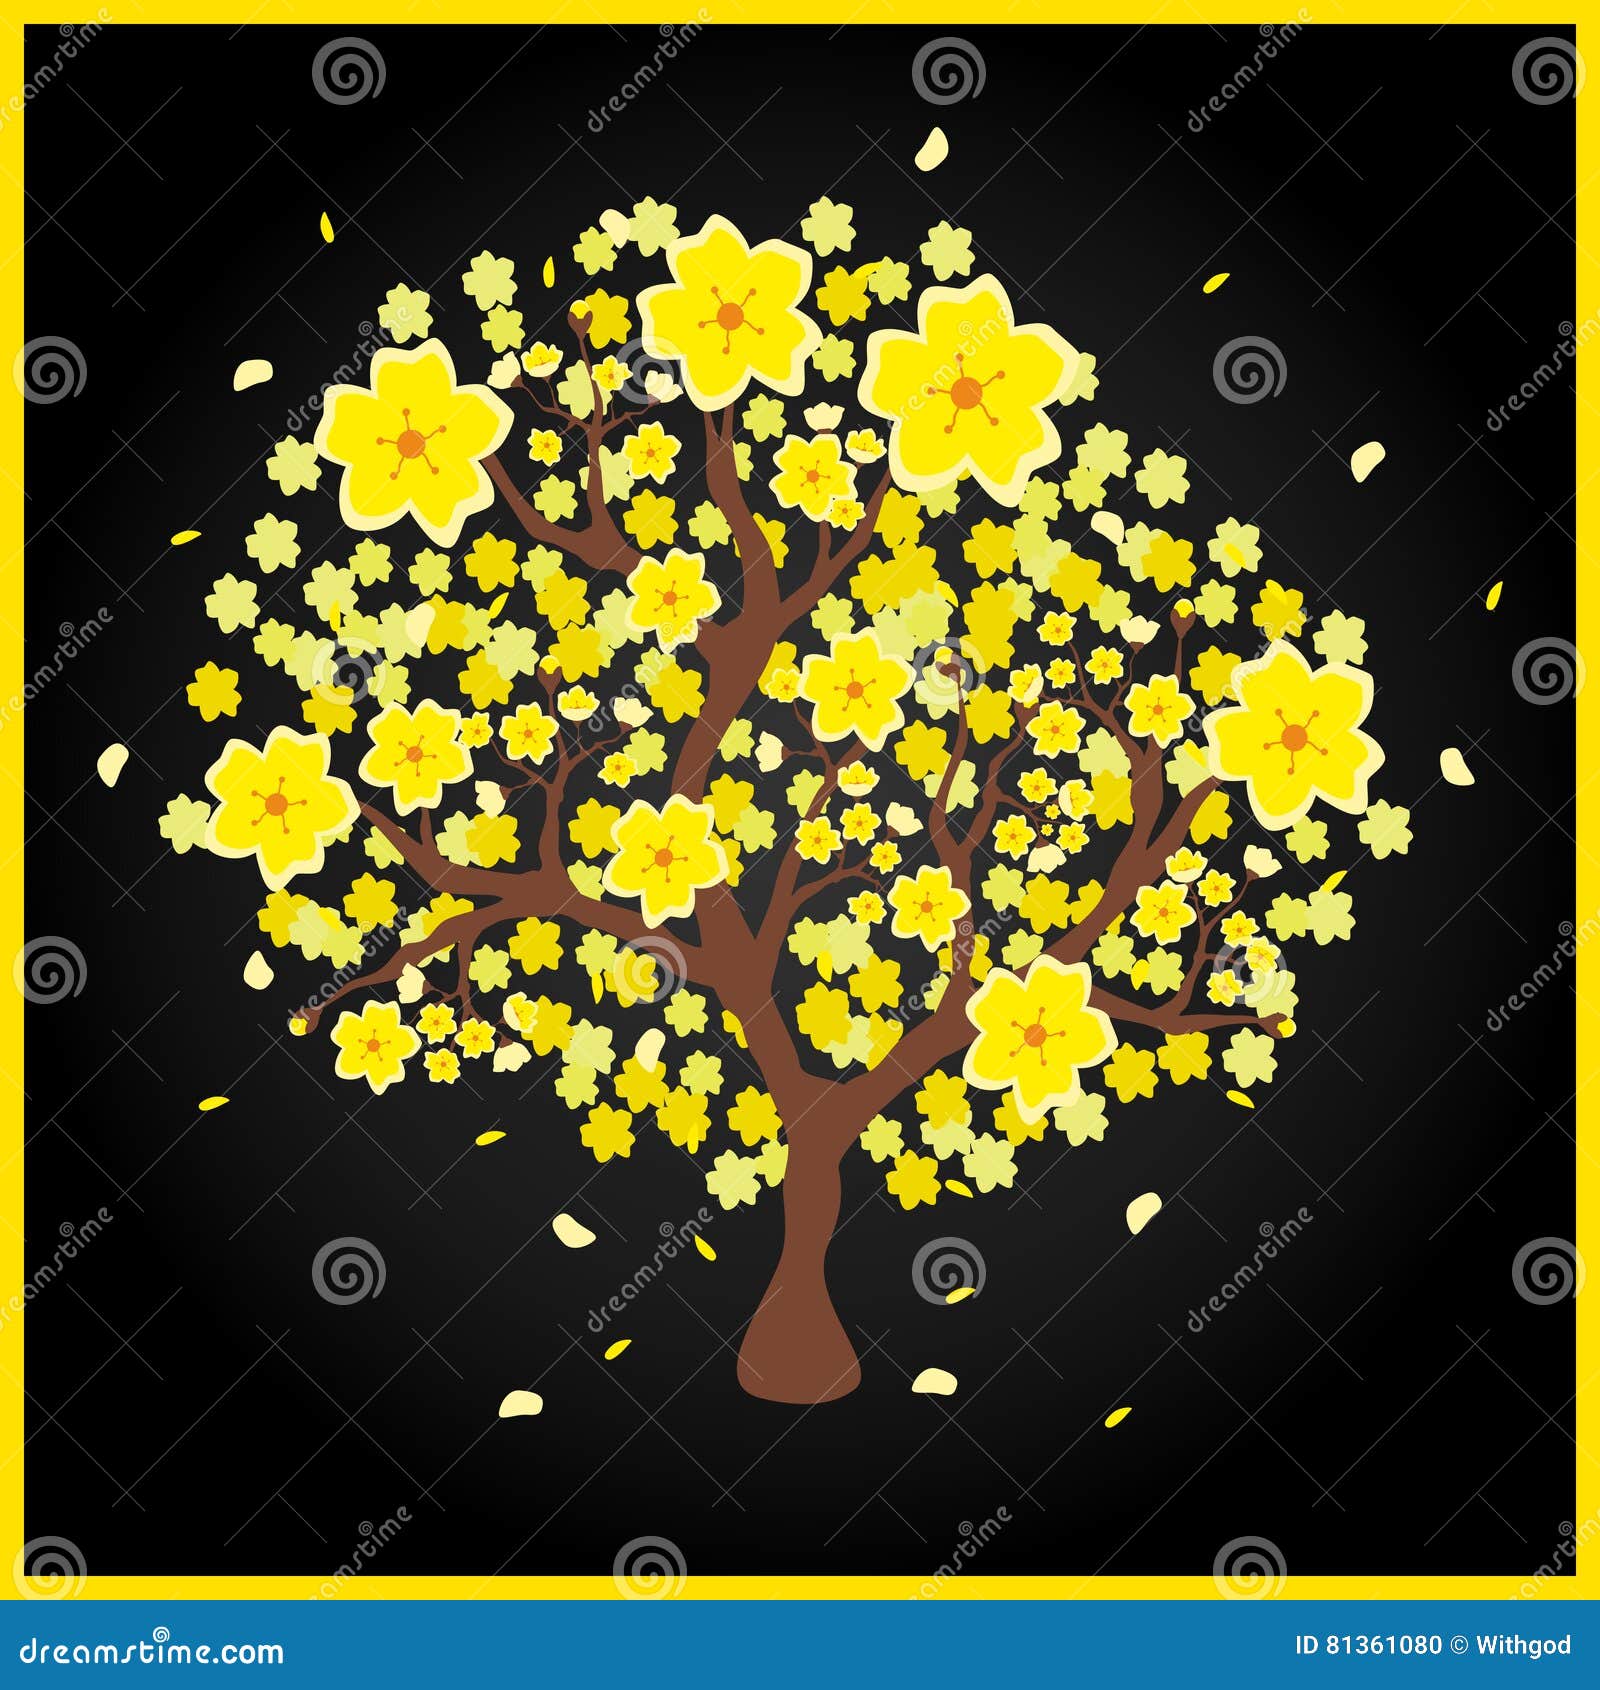 Hoa mai yellow peach tree stock illustration. Illustration of fresh -  81361080